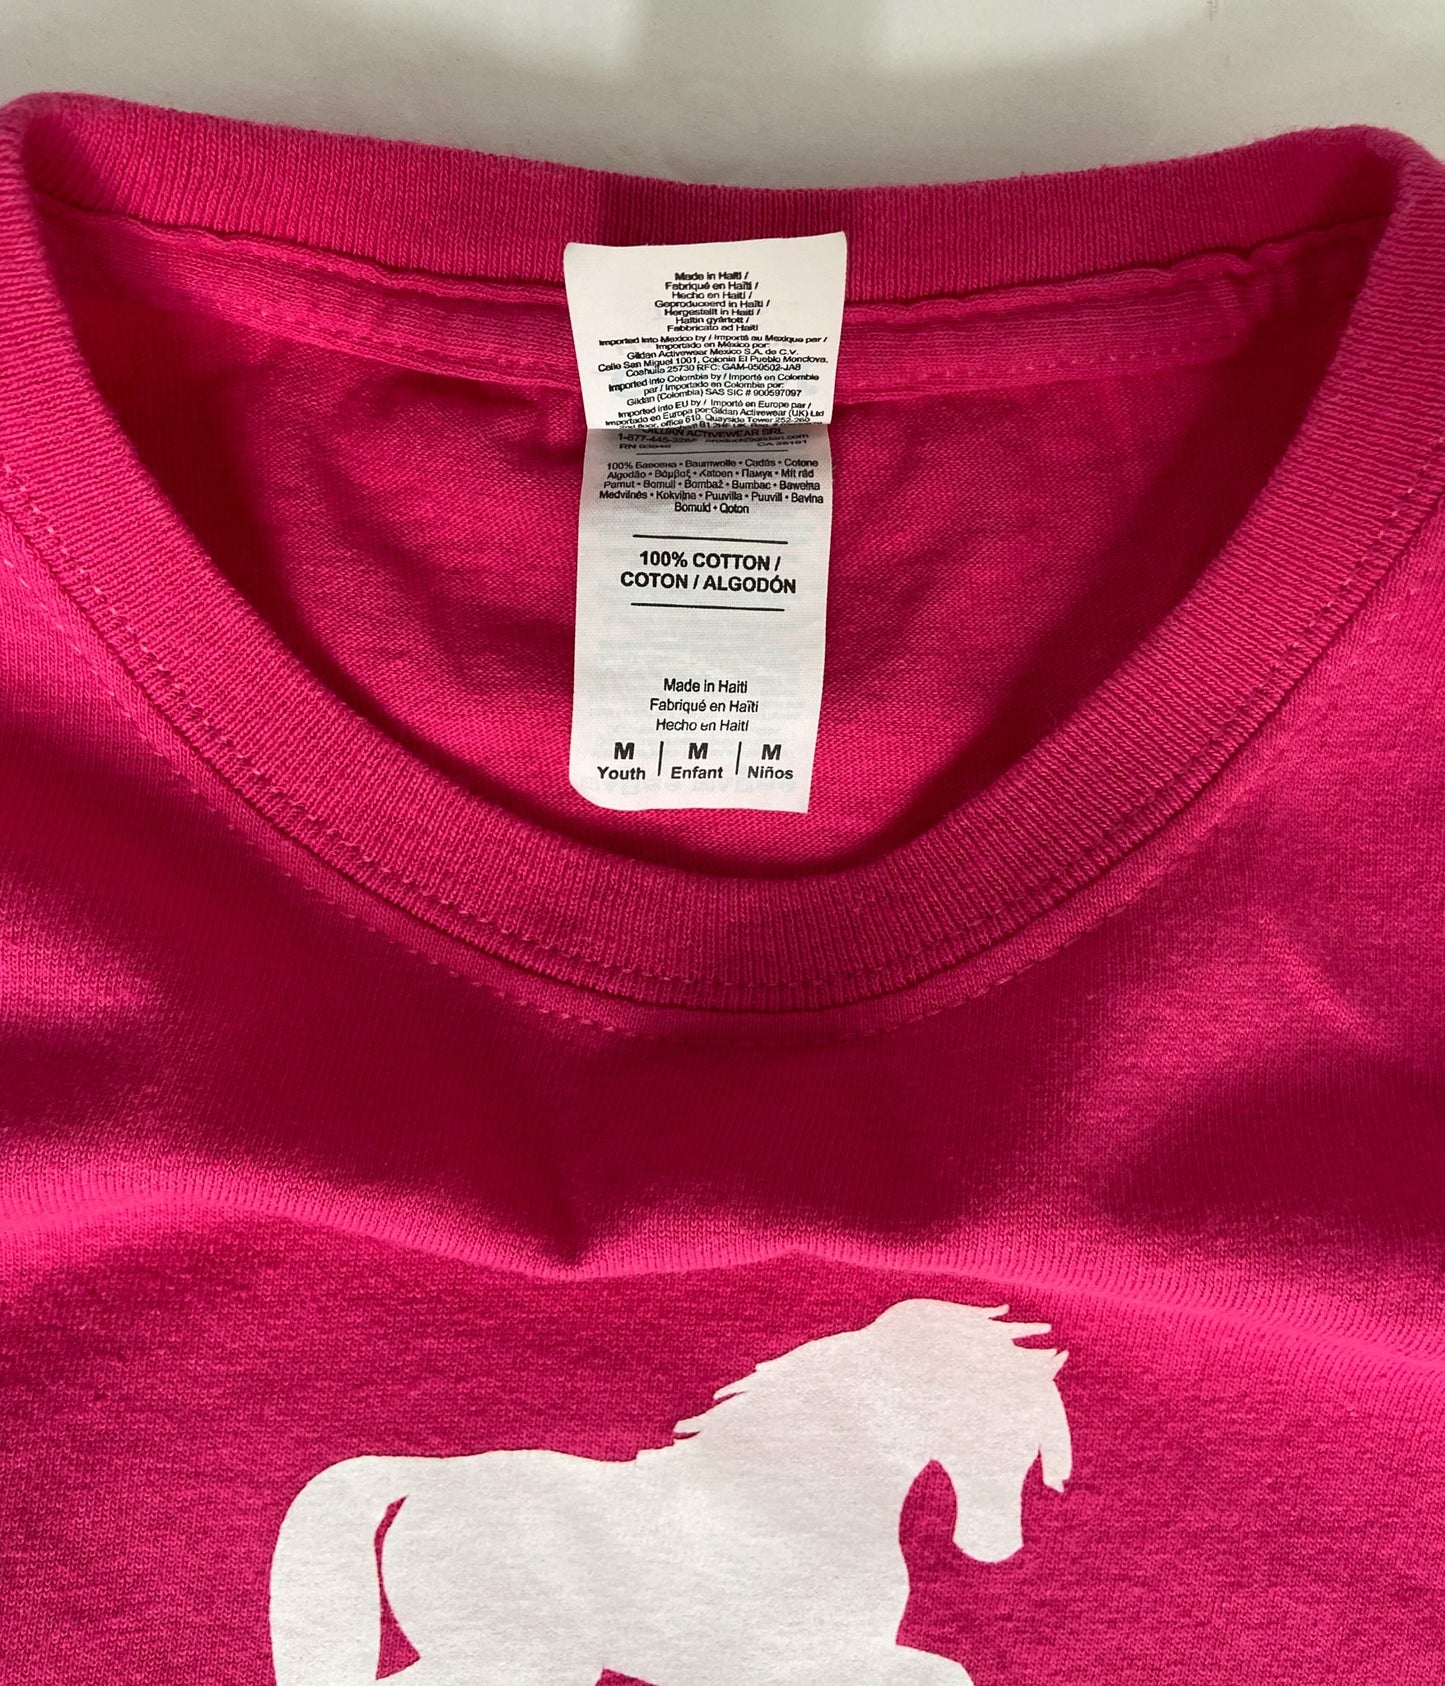 Keep Calm and Love Horses T Shirt - Pink - Youth Medium